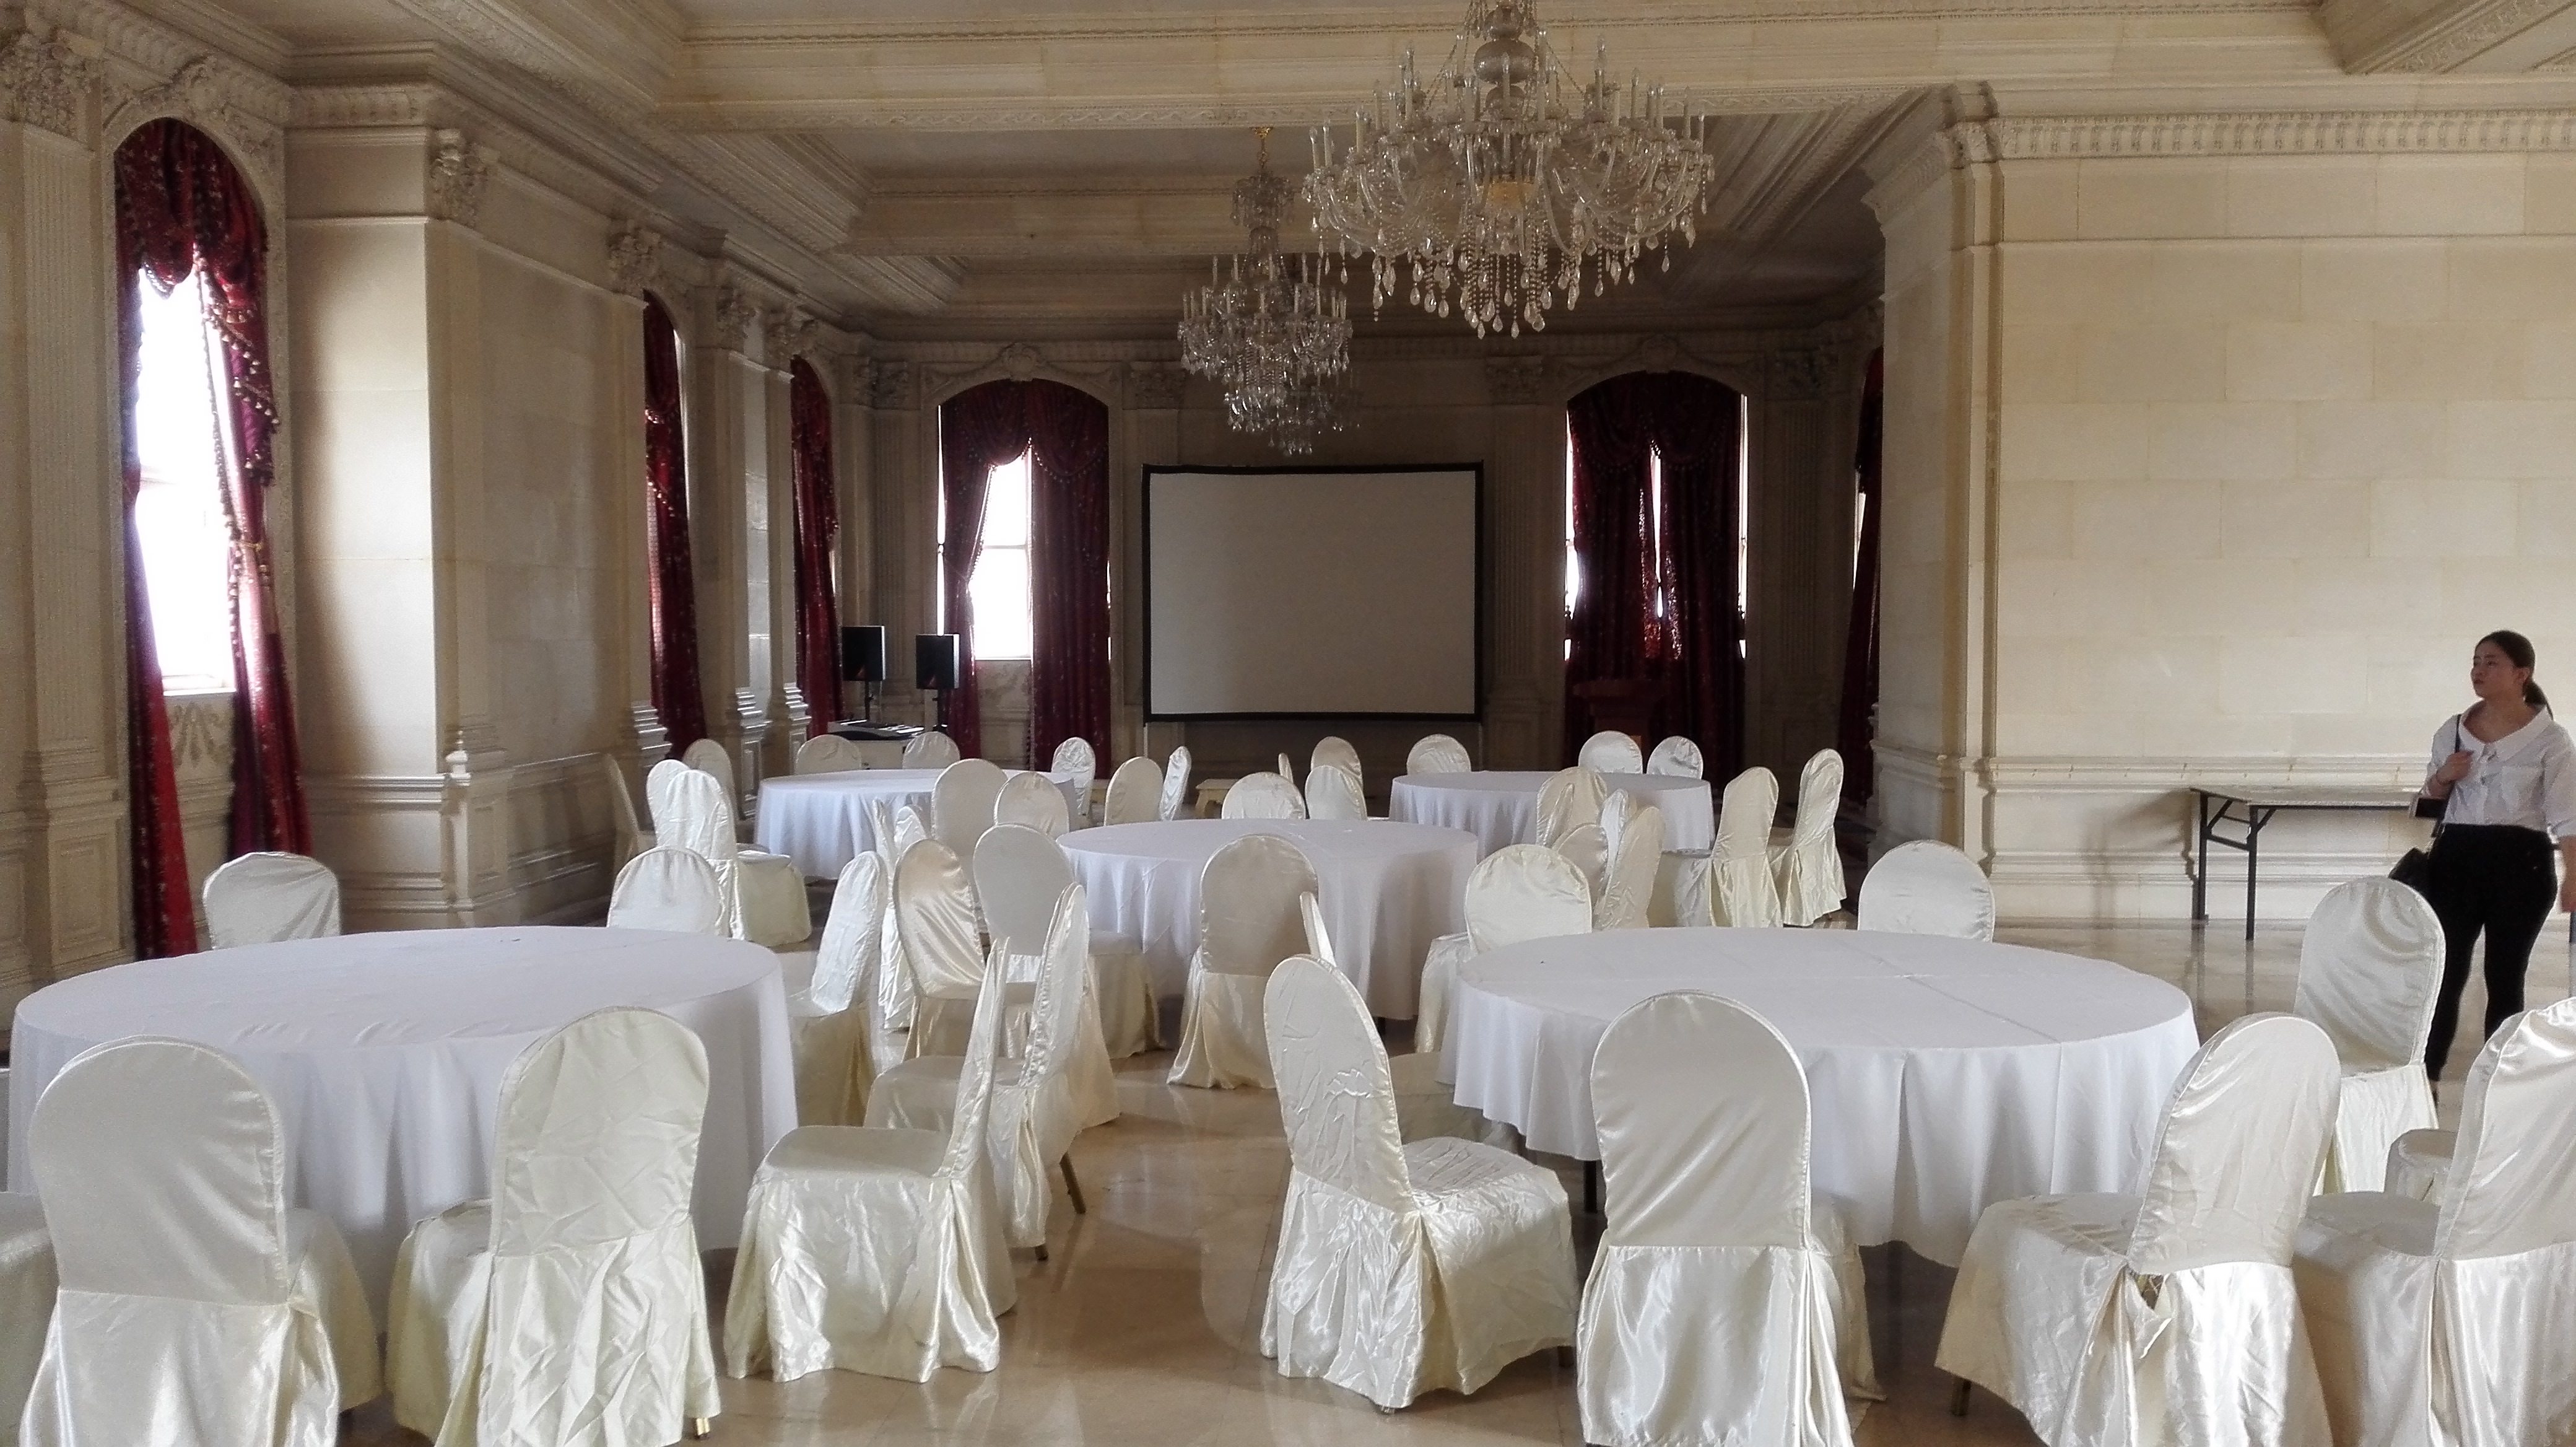 Beijing Chateau Laffitte Hotel (Workshop Room)